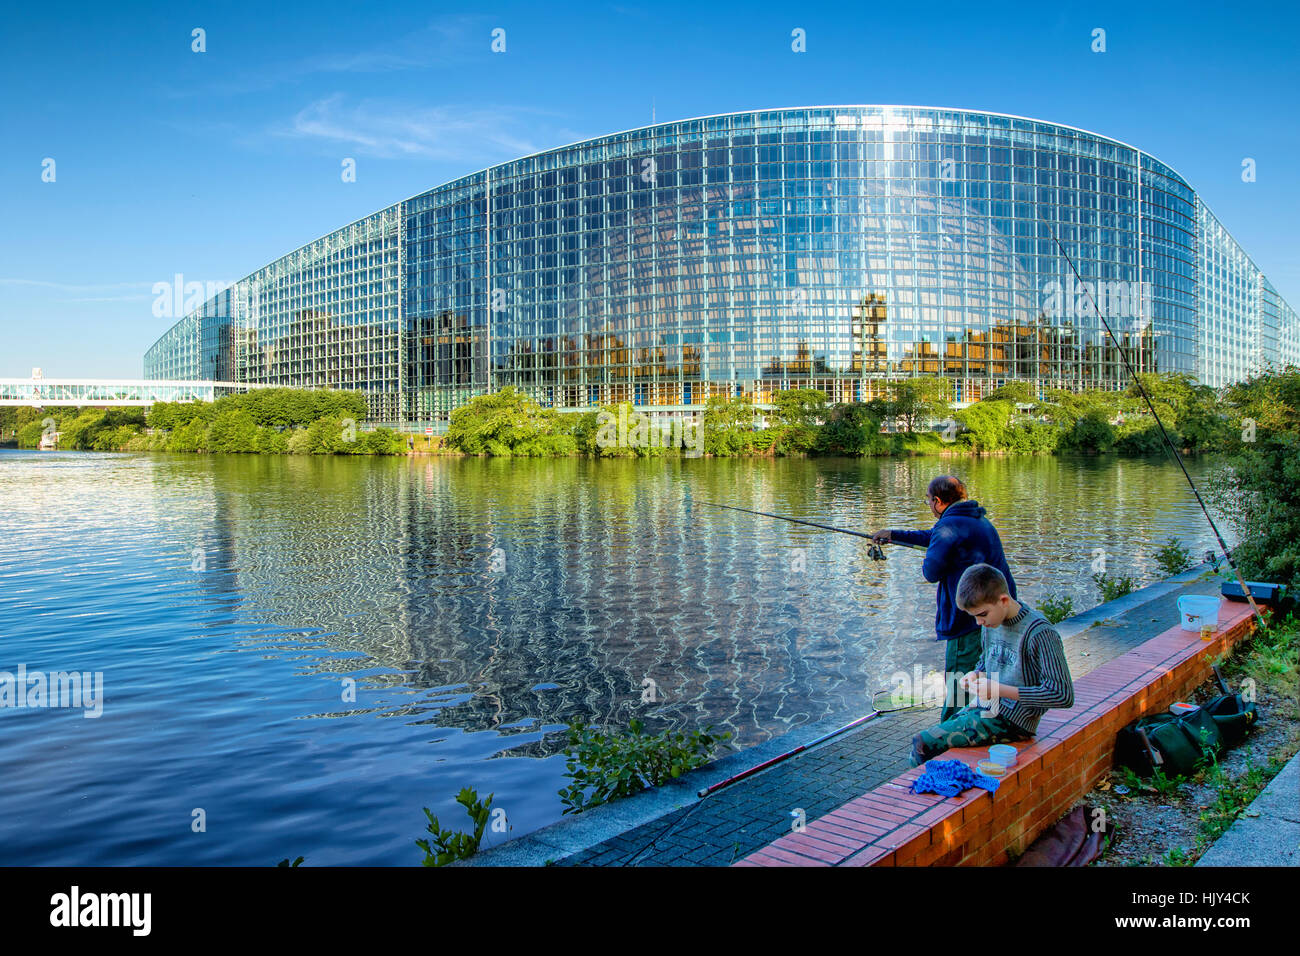 Edificio del Parlamento europeo a Strasburgo Foto Stock